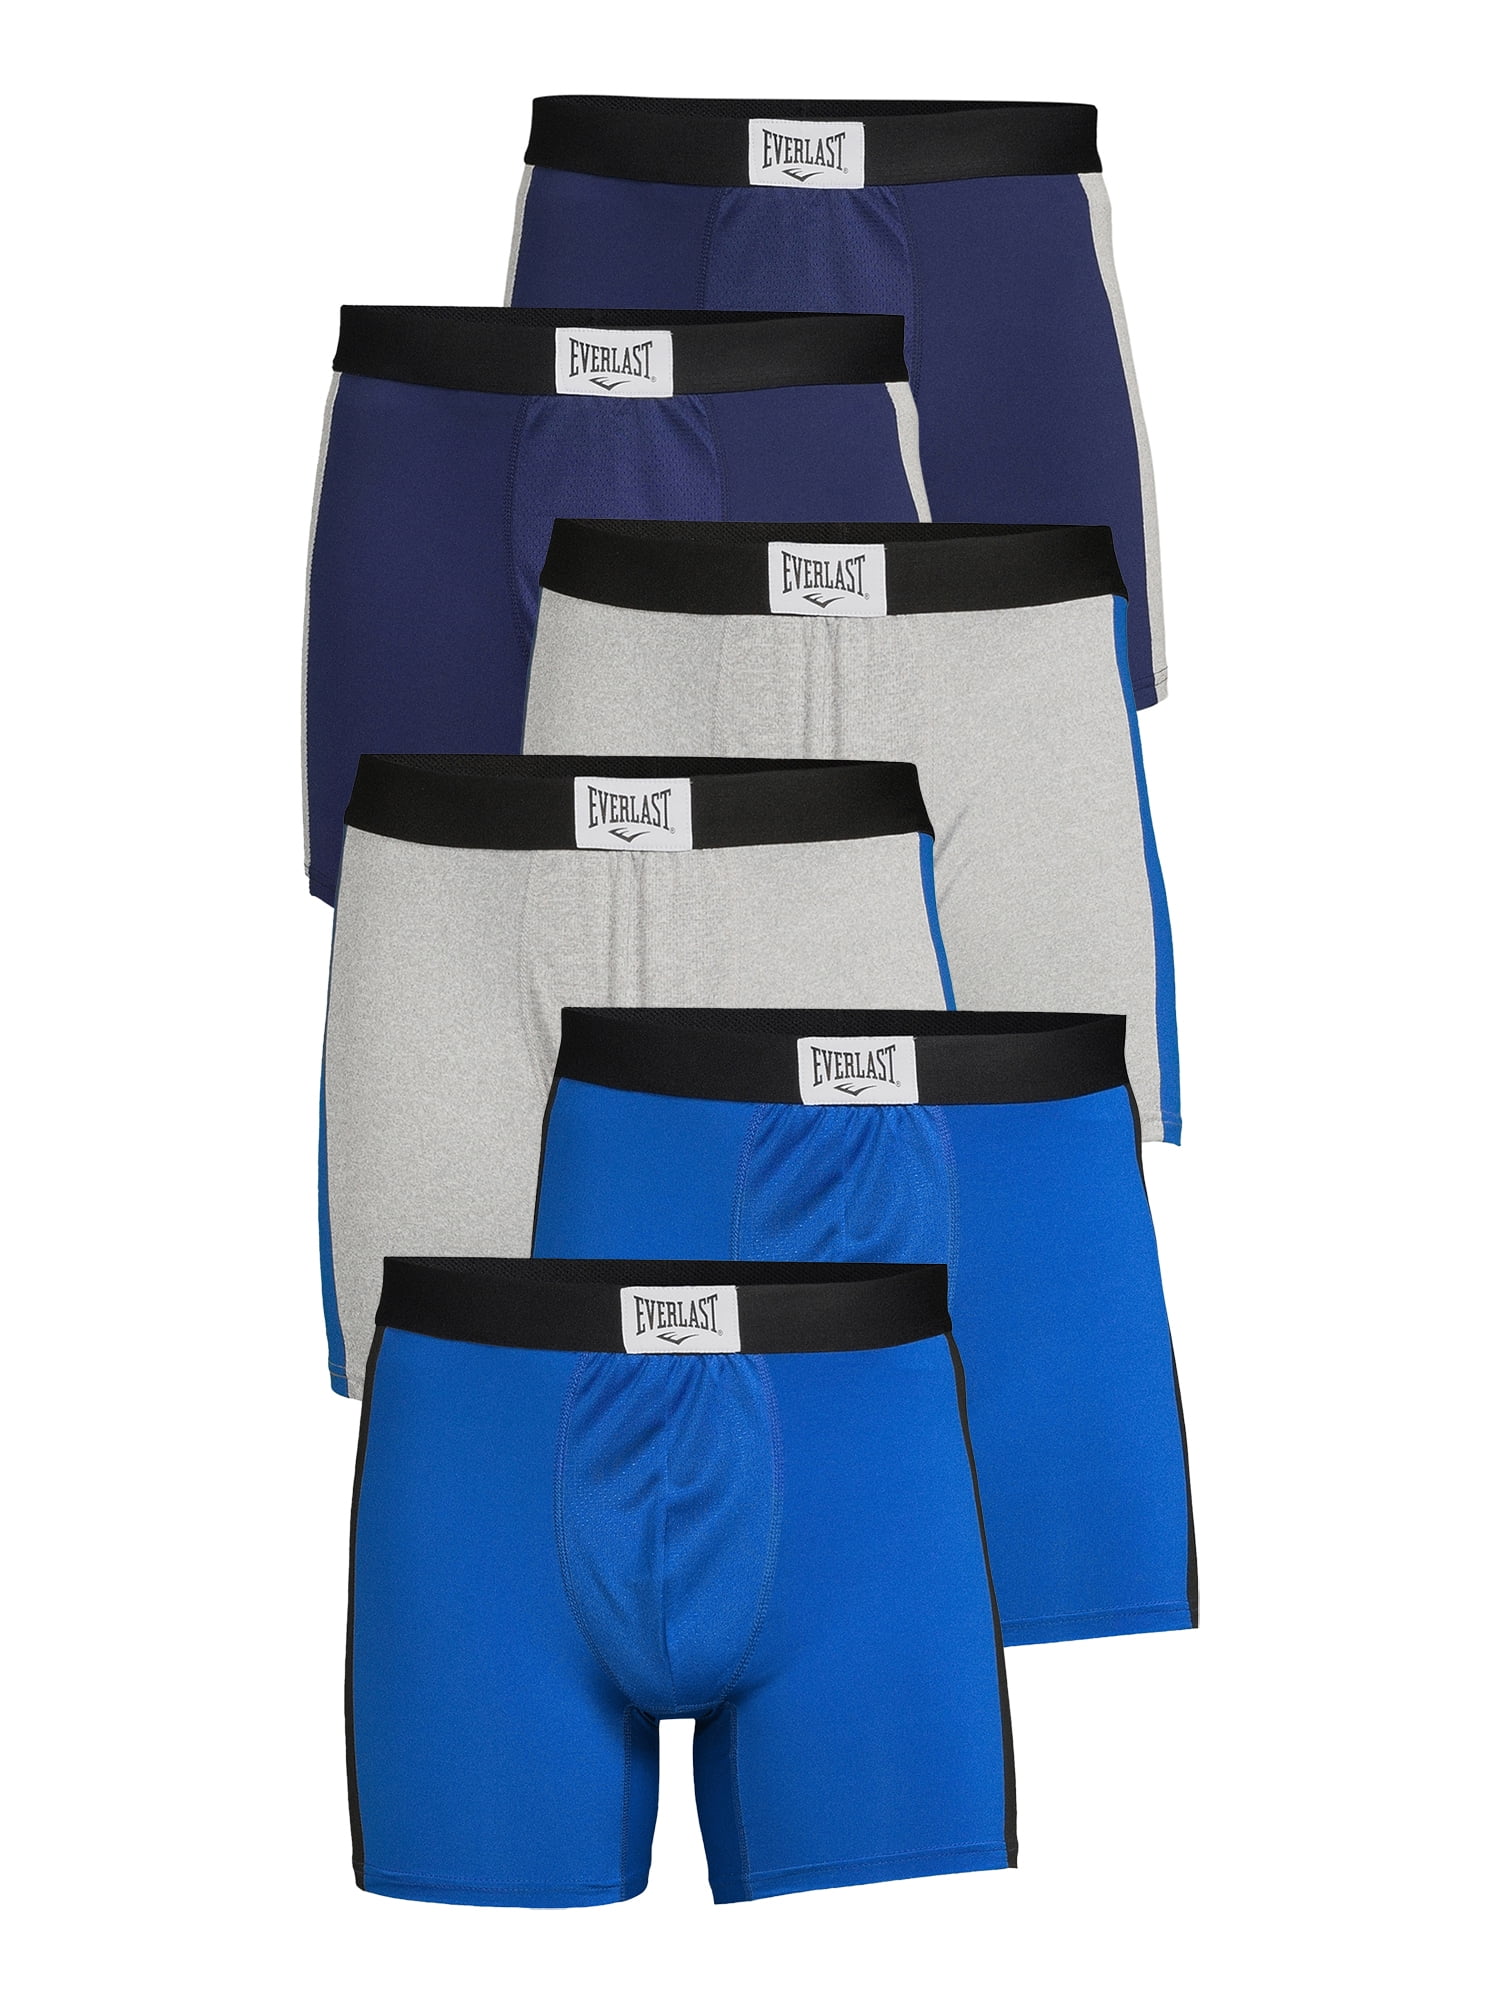 Everlast Navy Blue Printed Mens Nylon Underwear, Type: Trunks at Rs  70/piece in Surat